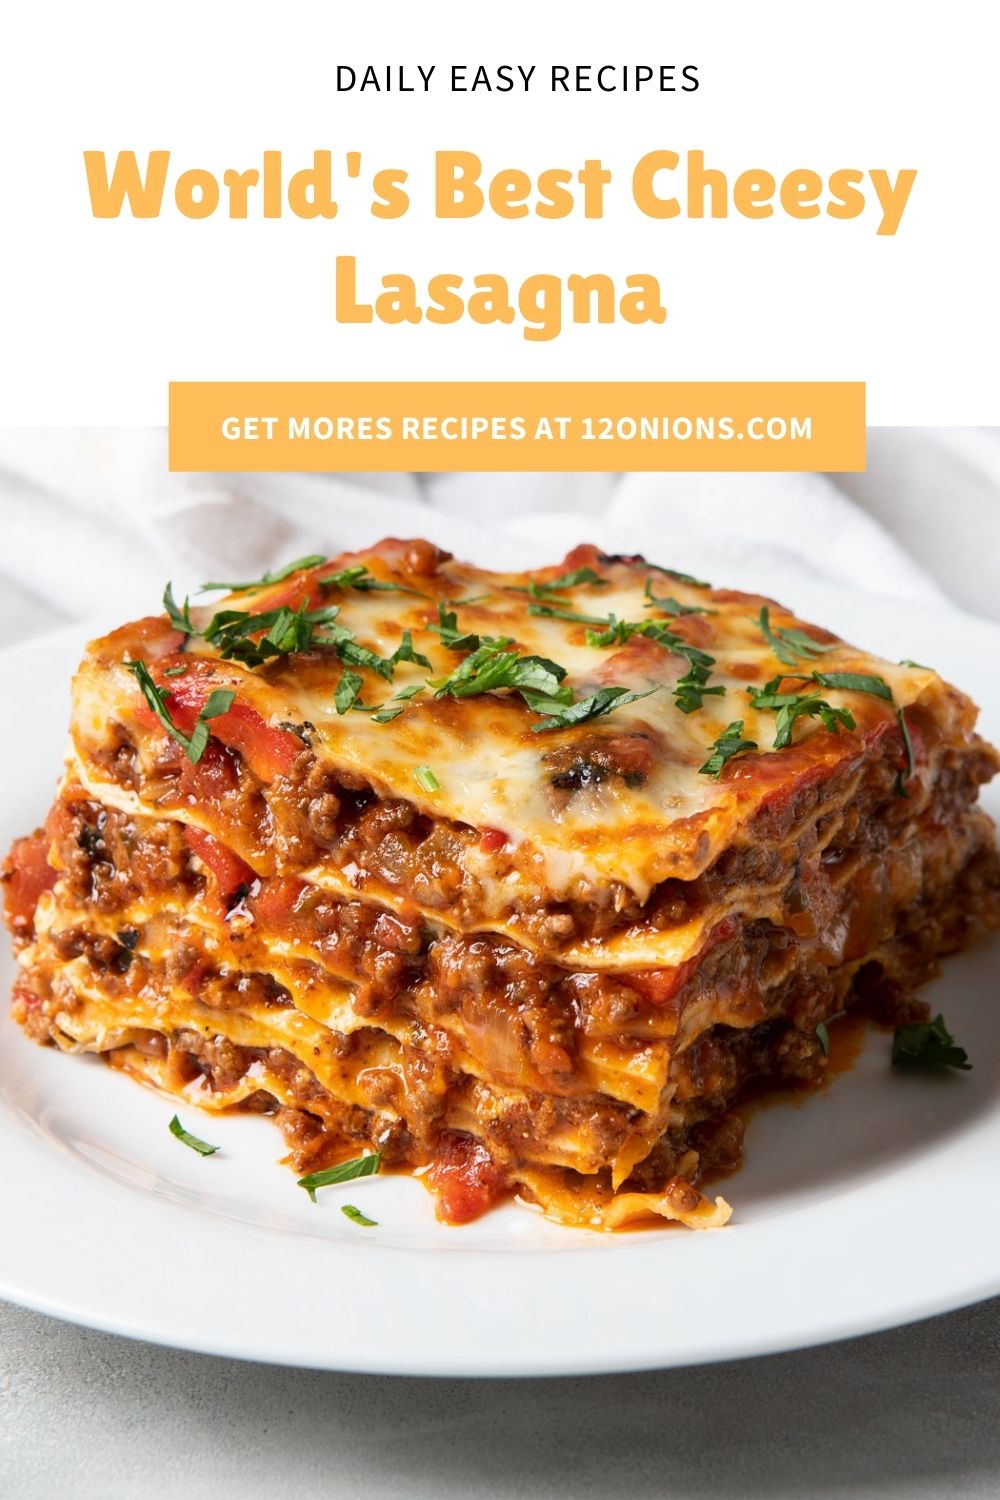 World's Best Cheesy Lasagna